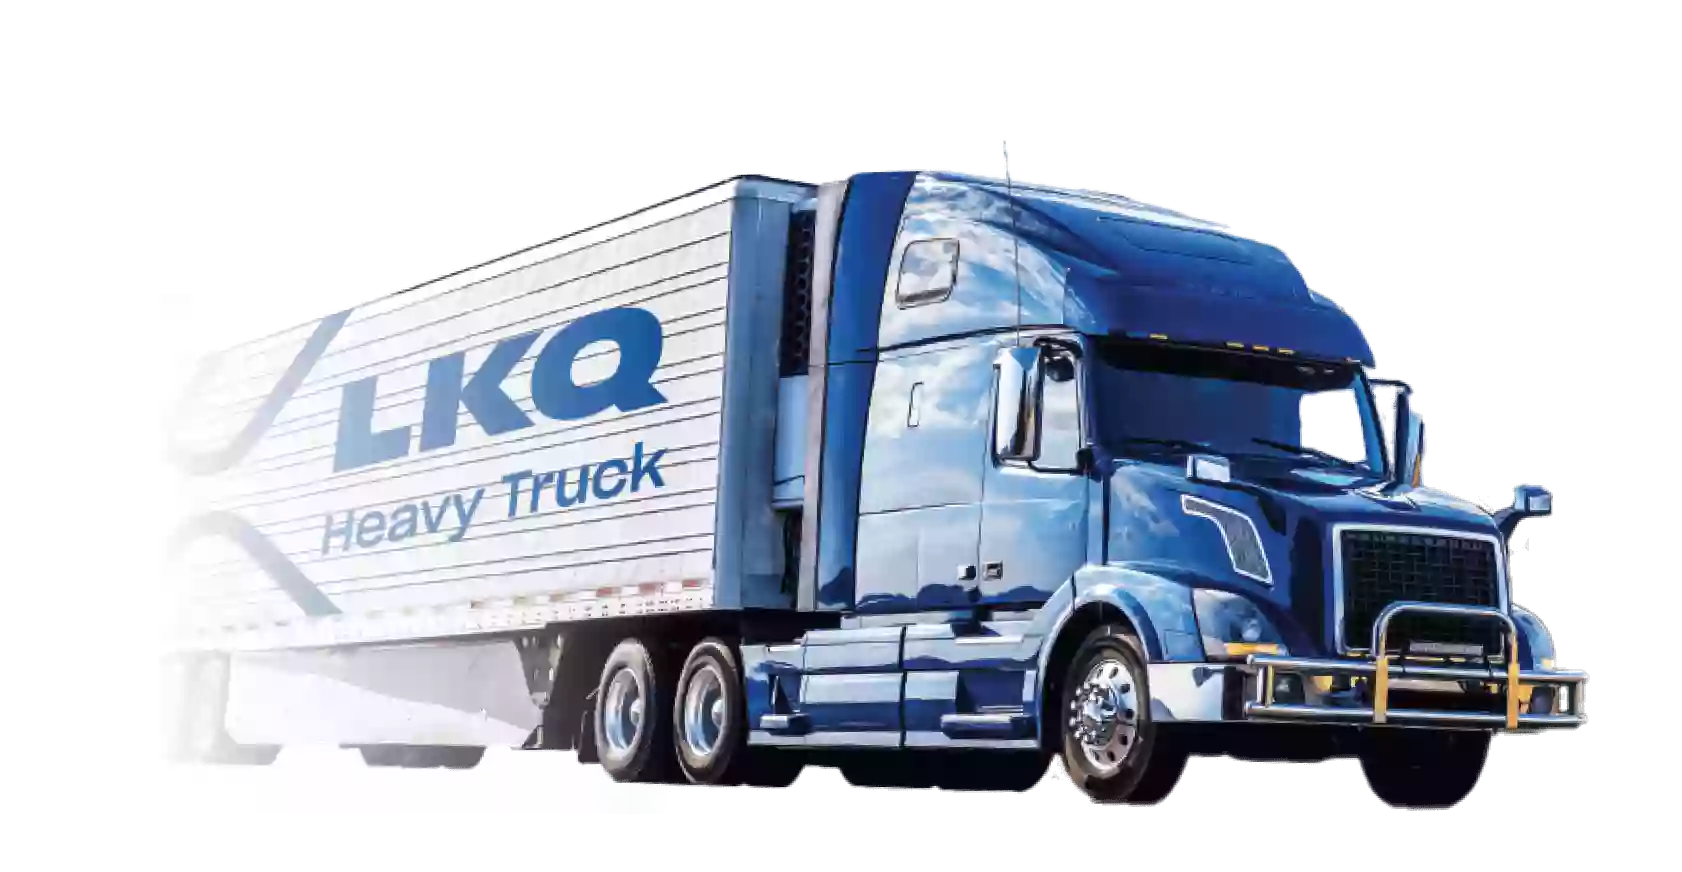 LKQ Heavy Truck, Watseka